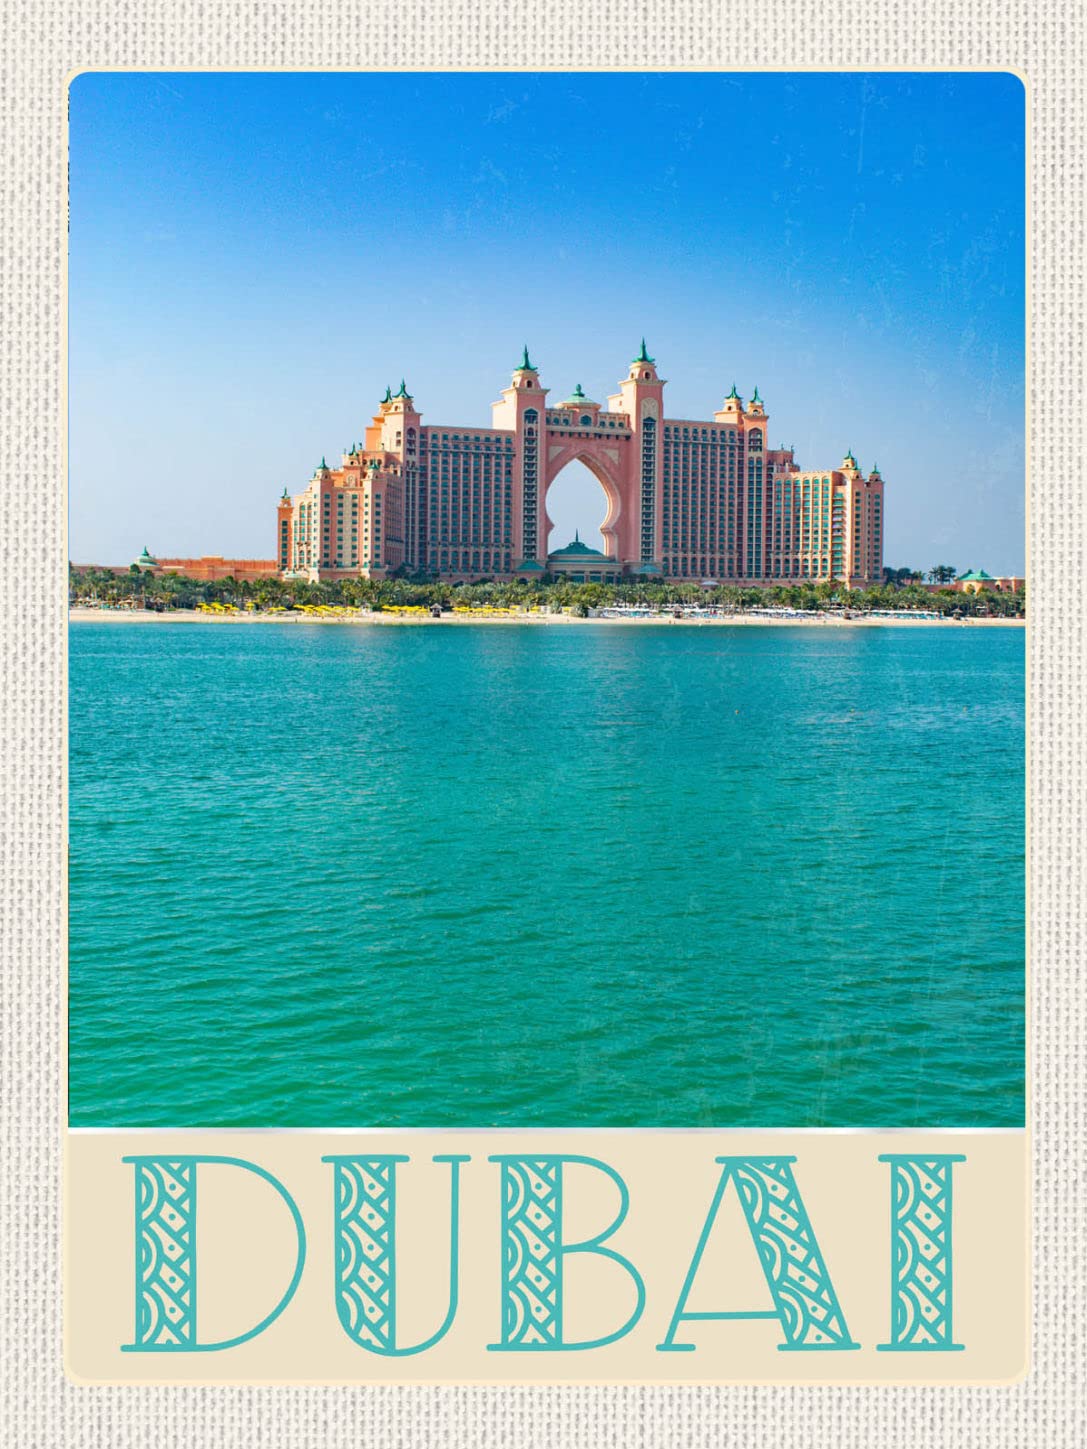 Ontrada Blechschild 30x40cm gewölbt Dubai Strand Meer Moschee Sonne Deko Geschenk Schild